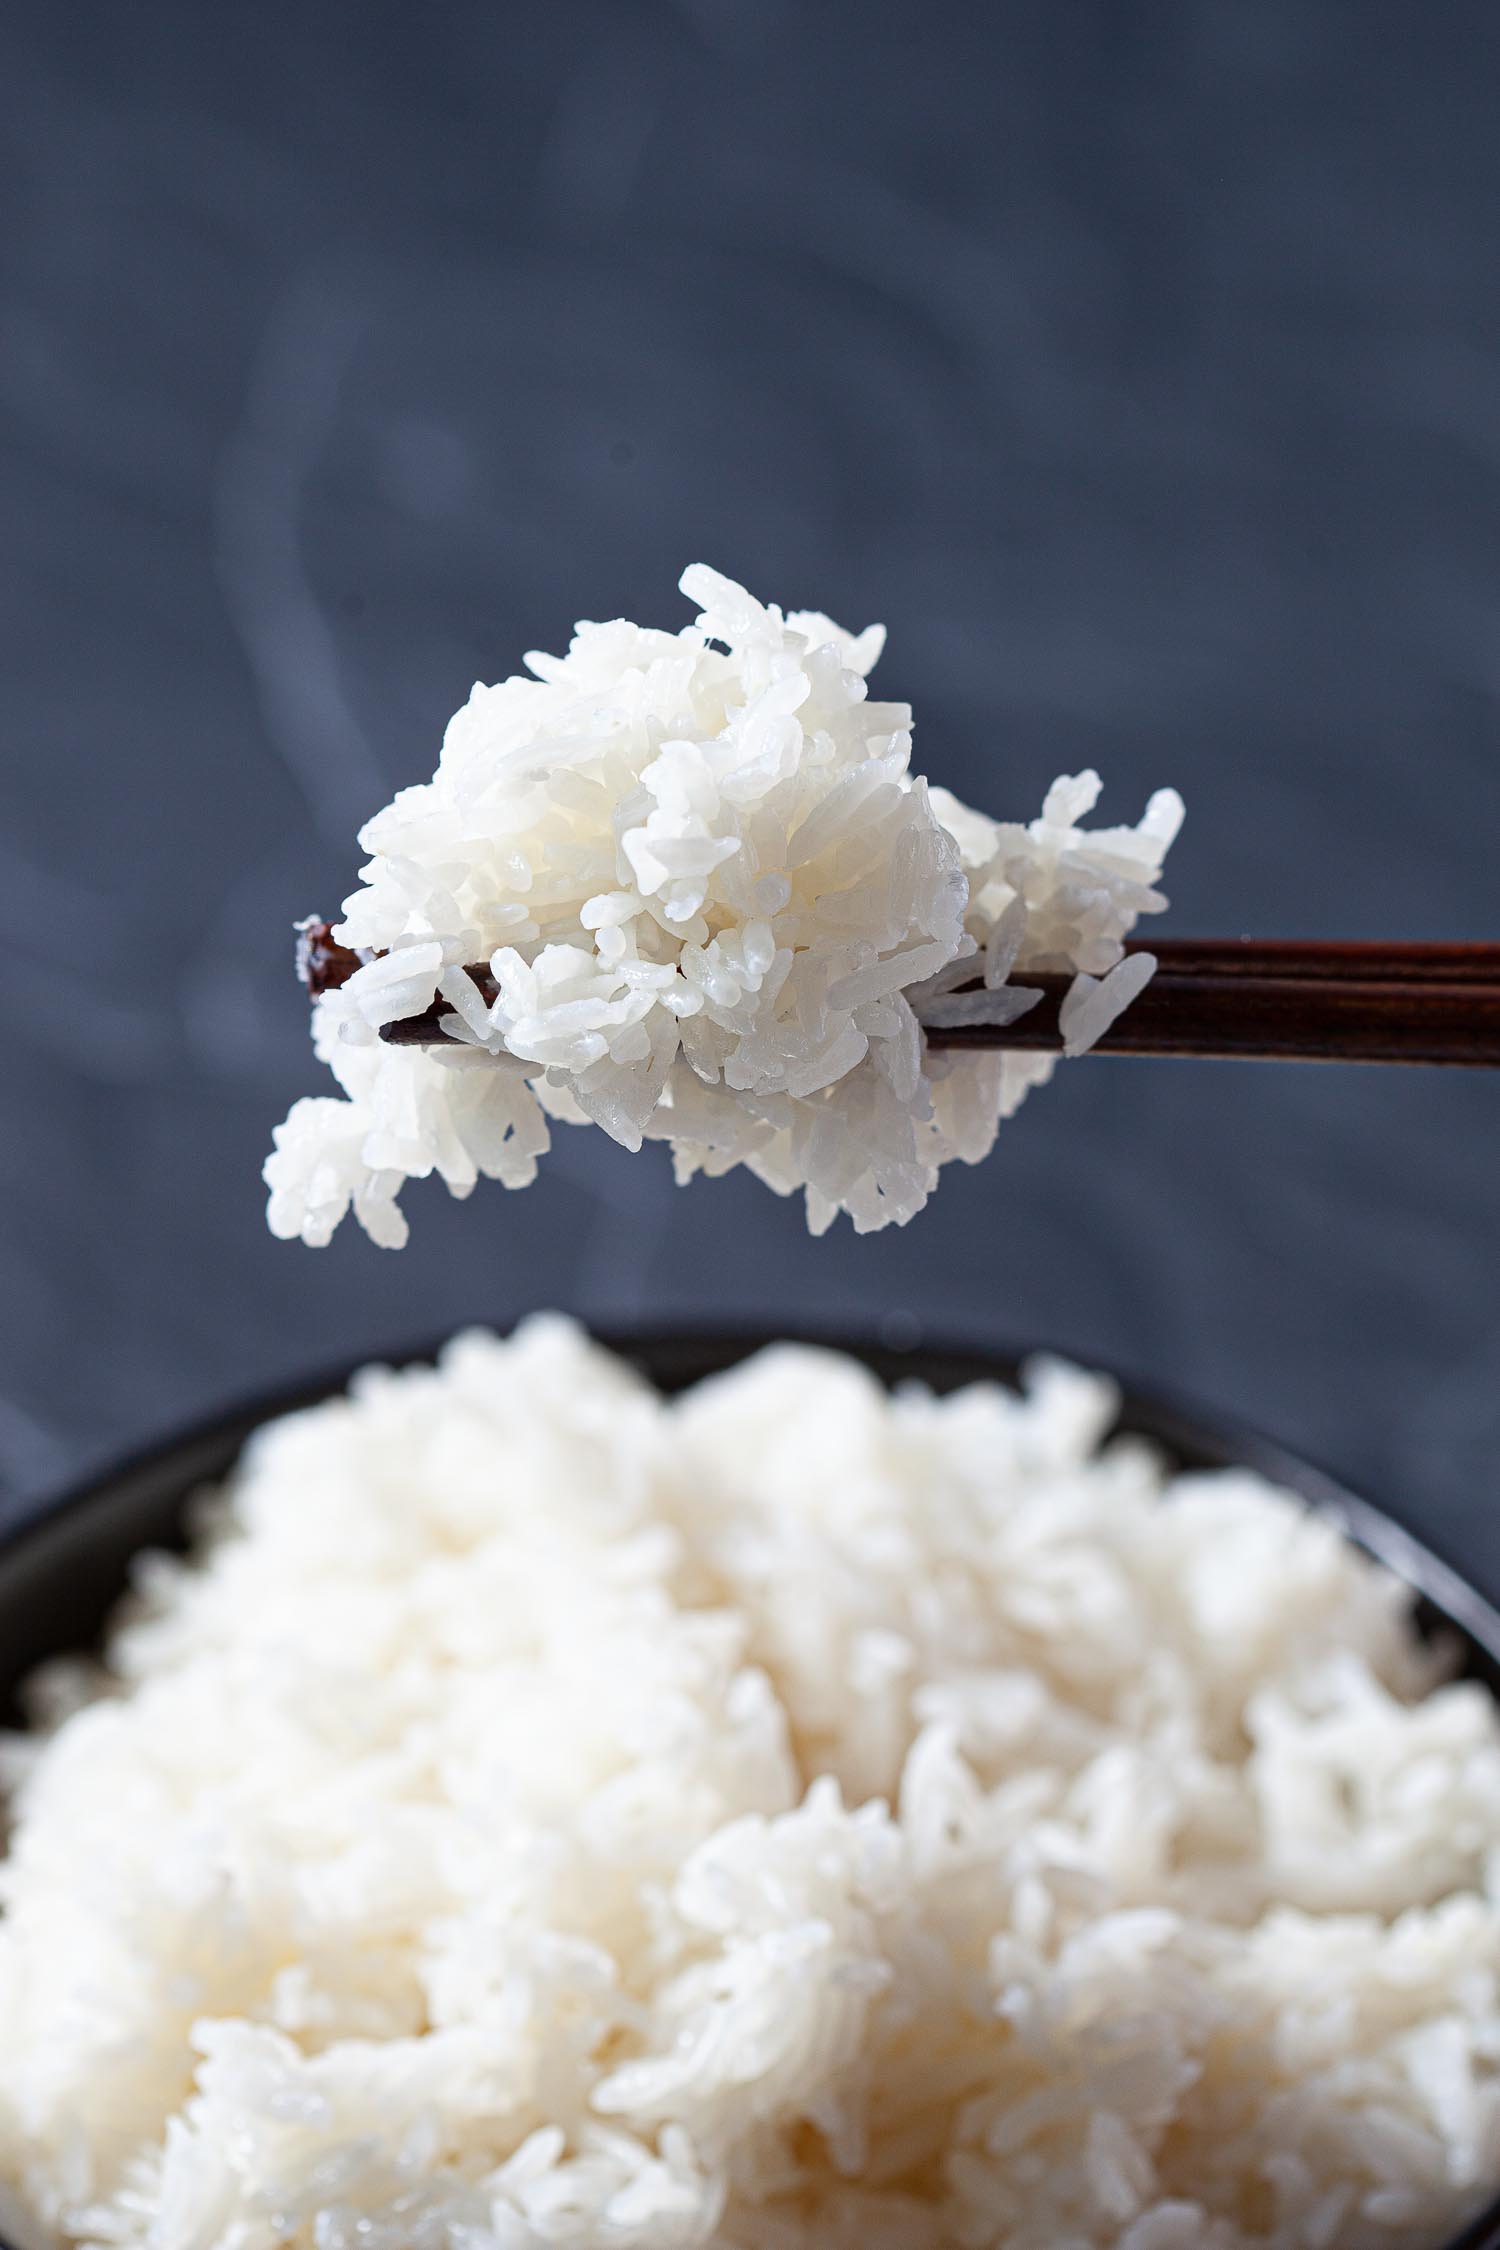 Easy Instant Pot Sticky Rice Recipe + Video